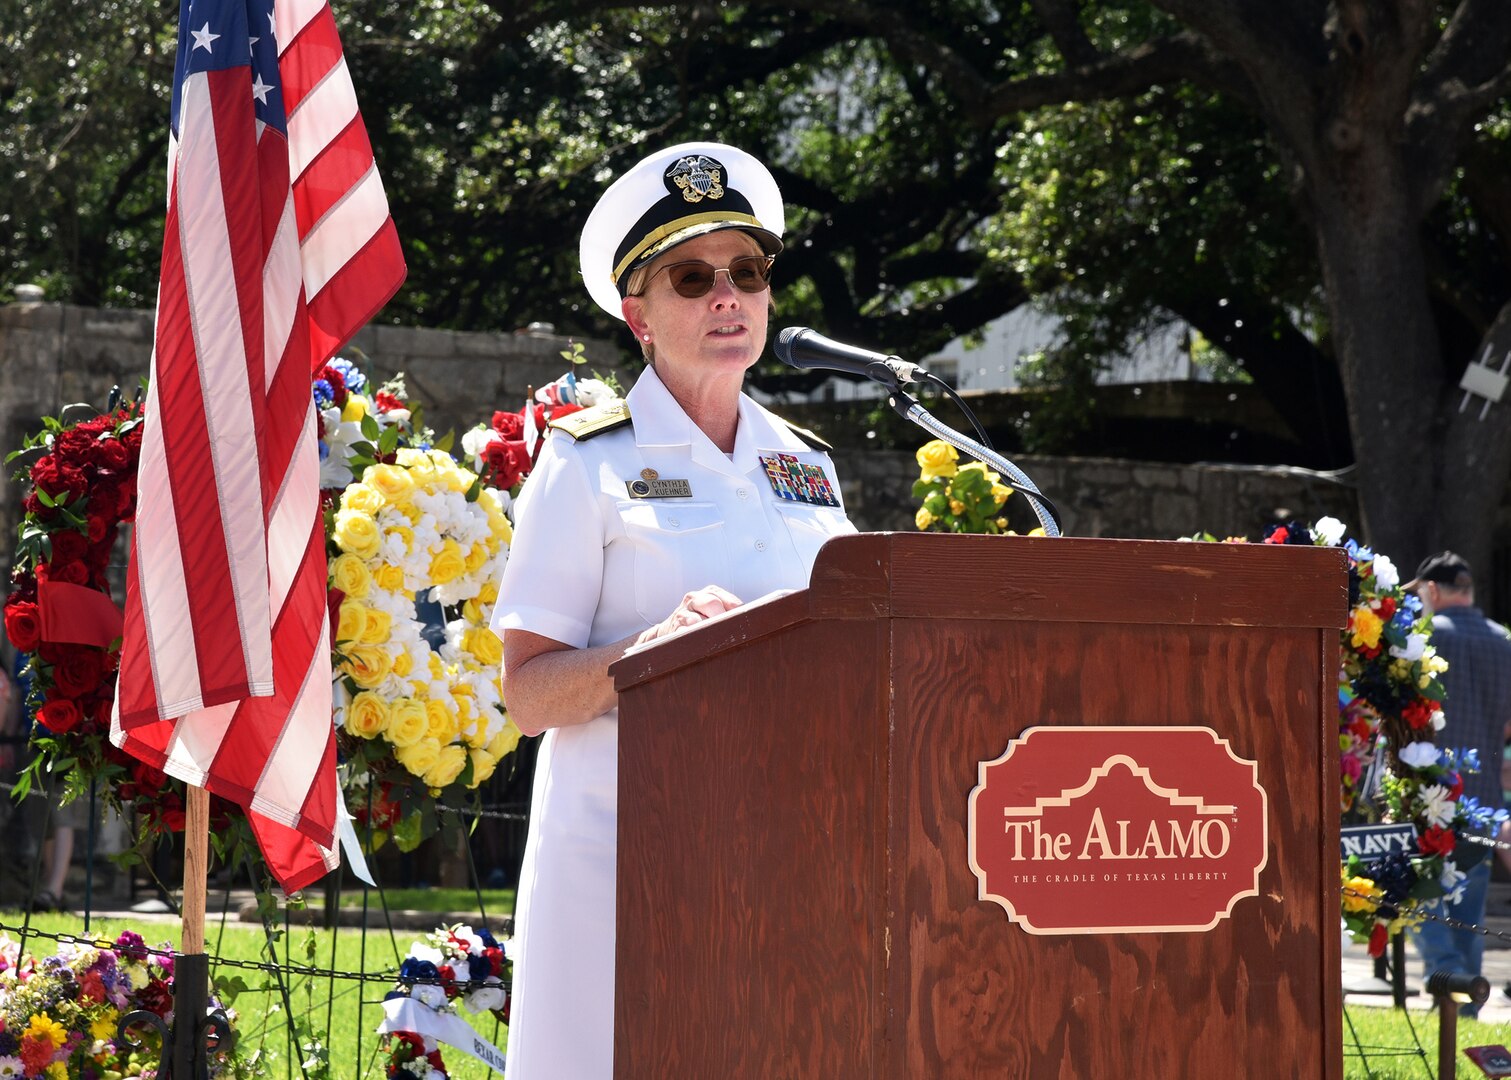 Rear Adm. Kuehner serves as Keynote Speaker at Navy Day at the Alamo